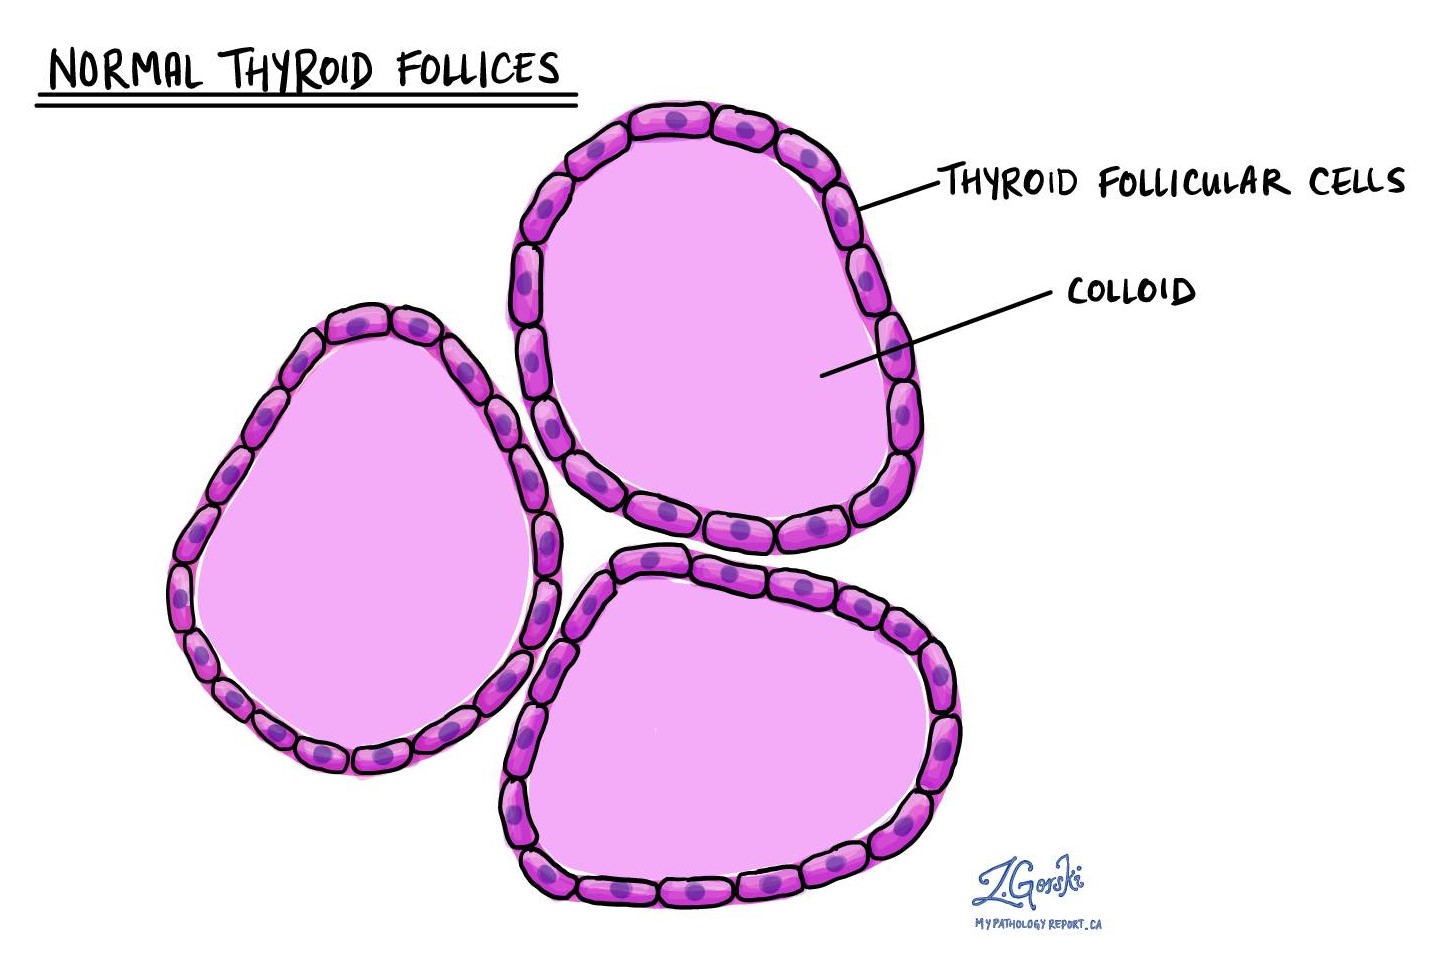 Normal thyroid follicles